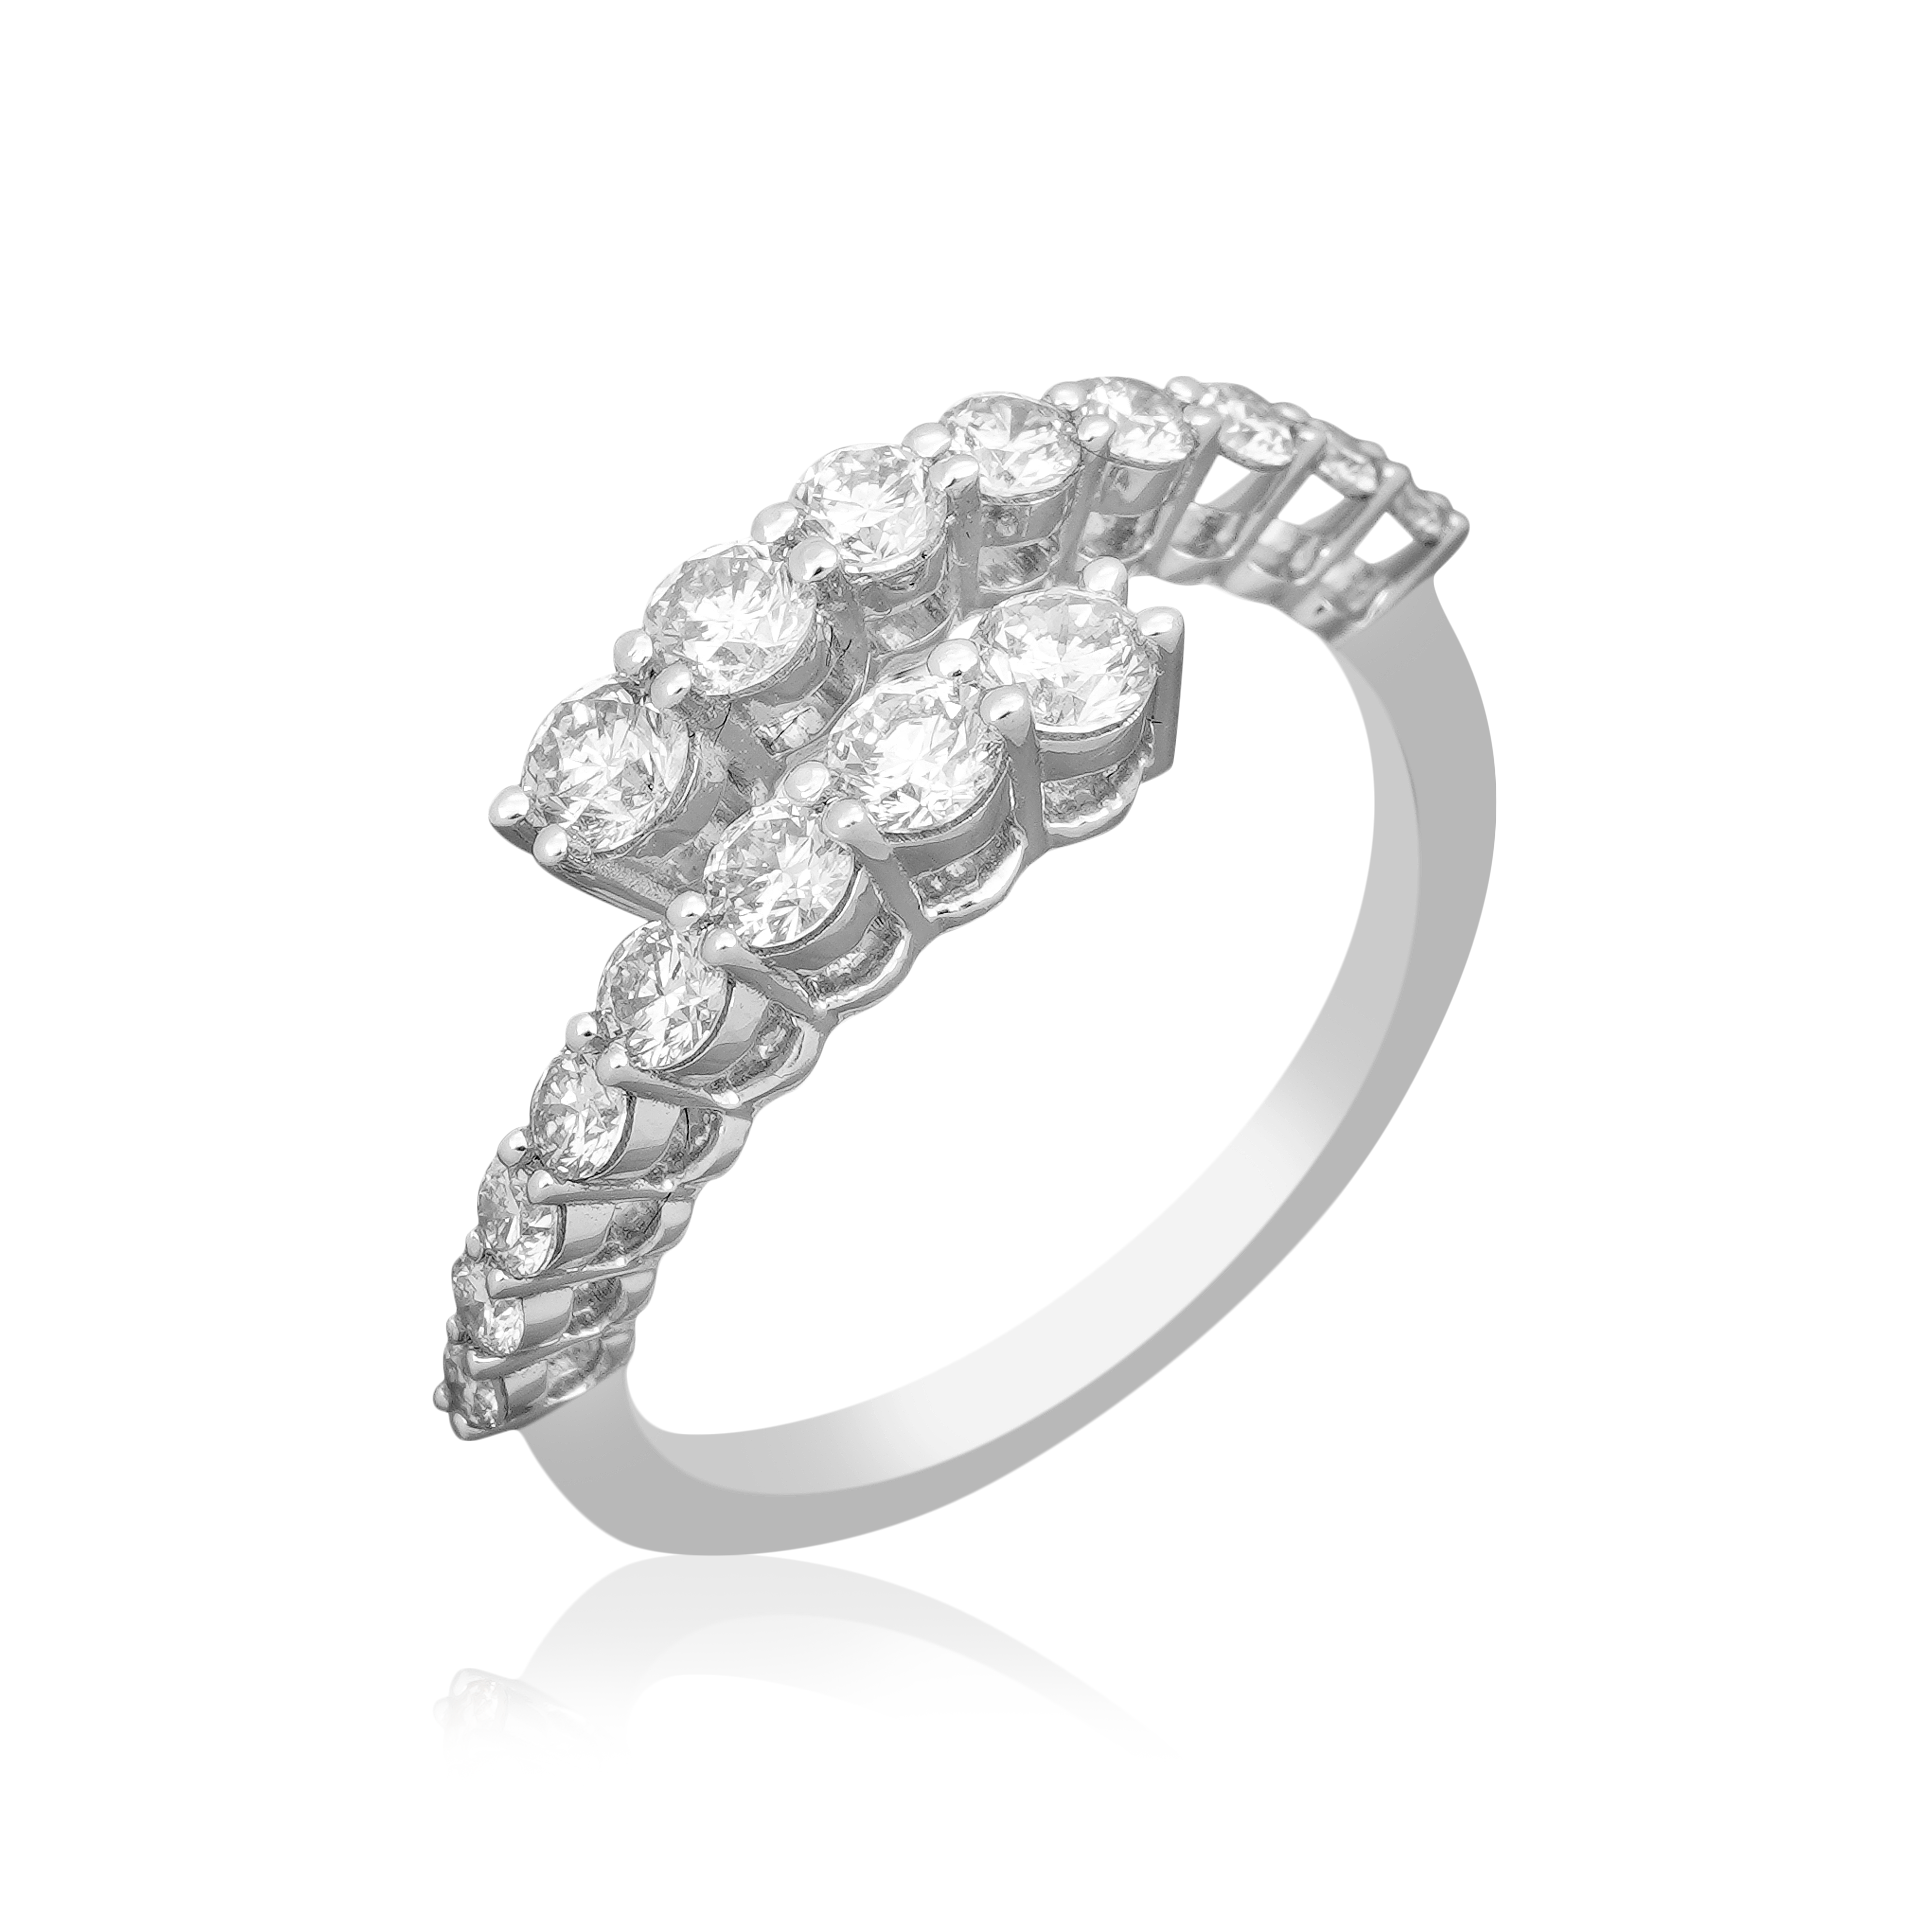 Chic and twistful diamond ring